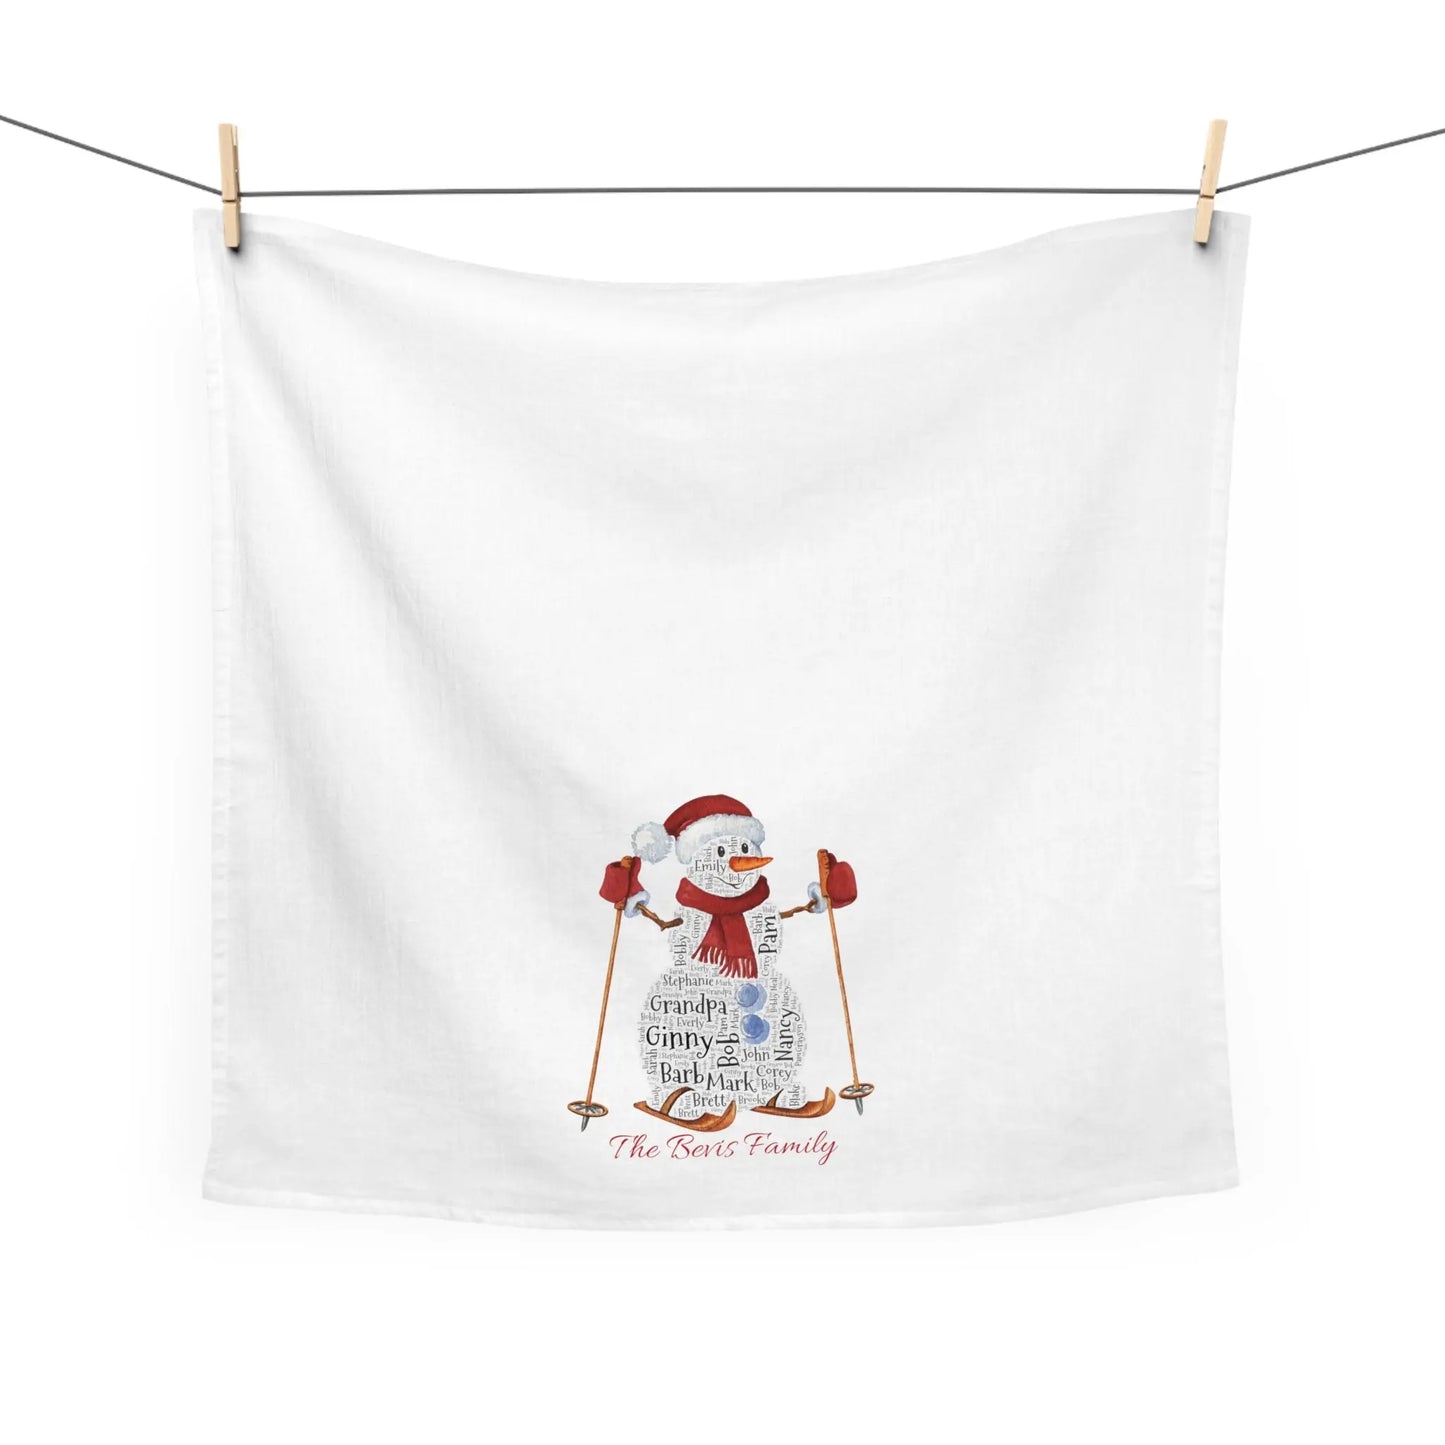 Snowman Kitchen Tea Towel - Christmas Tea Towel Printify